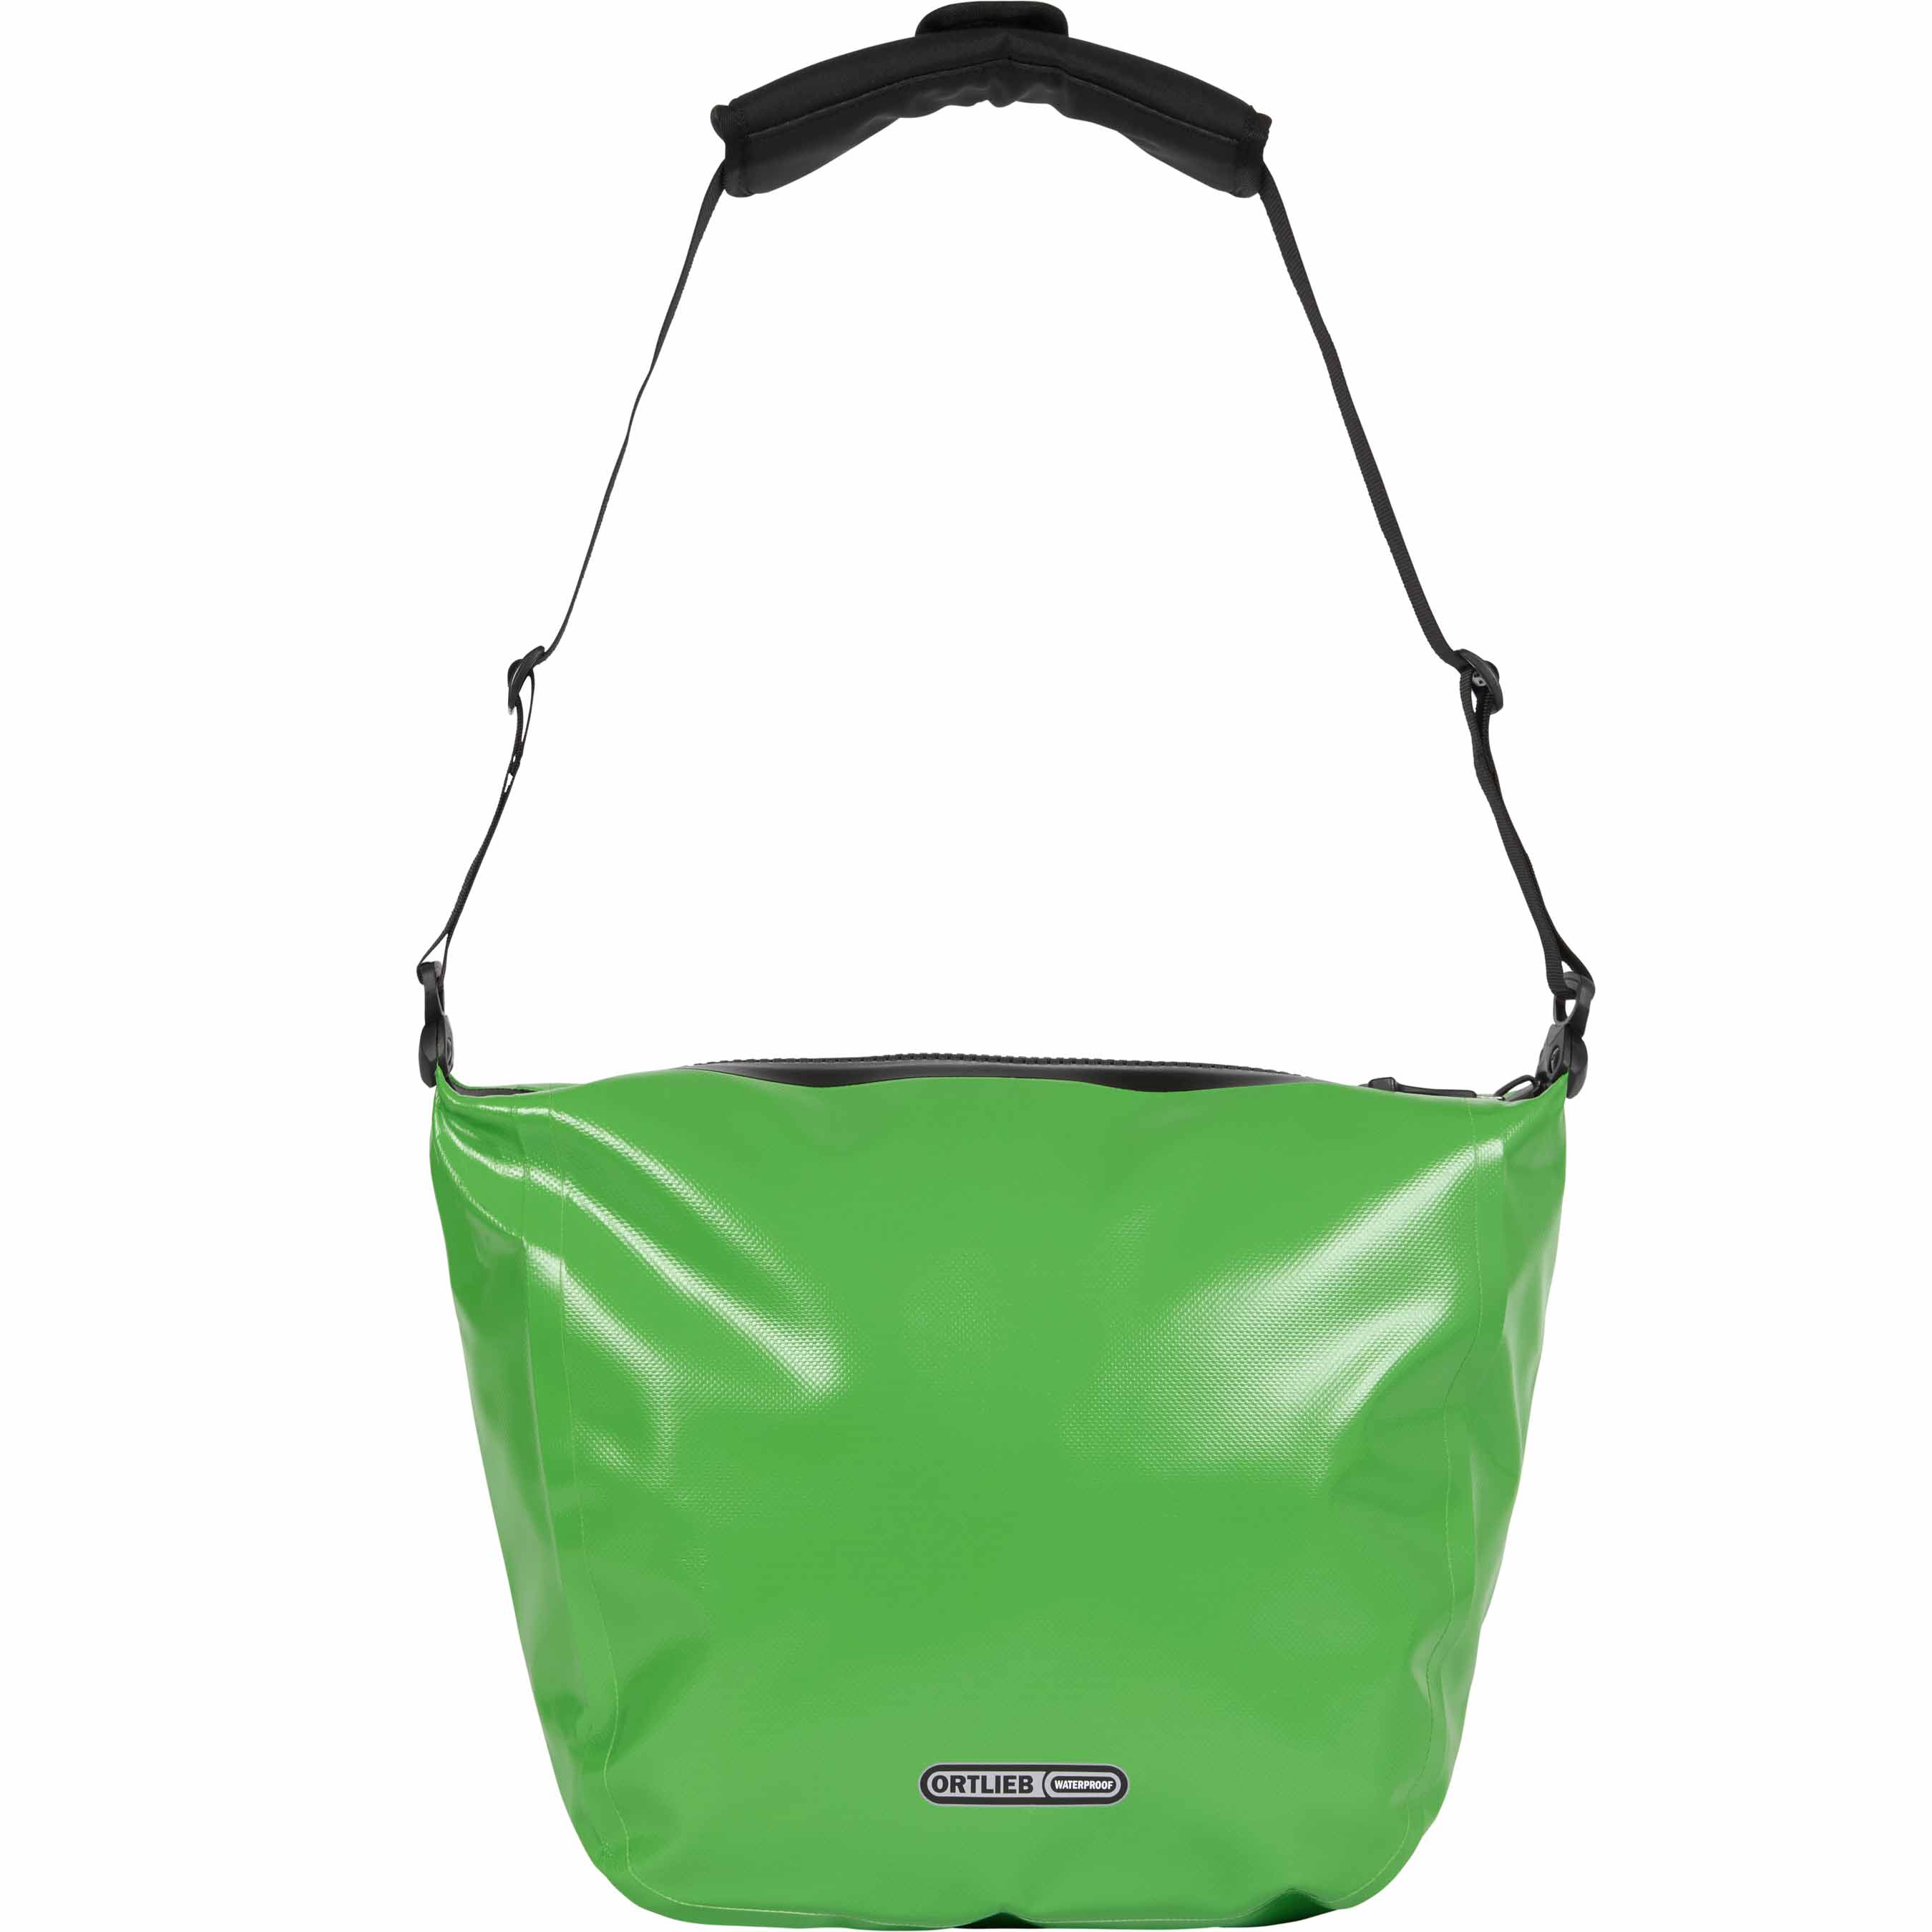 Supreme®/ORTLIEB Small Messenger Bag - Shop - Supreme